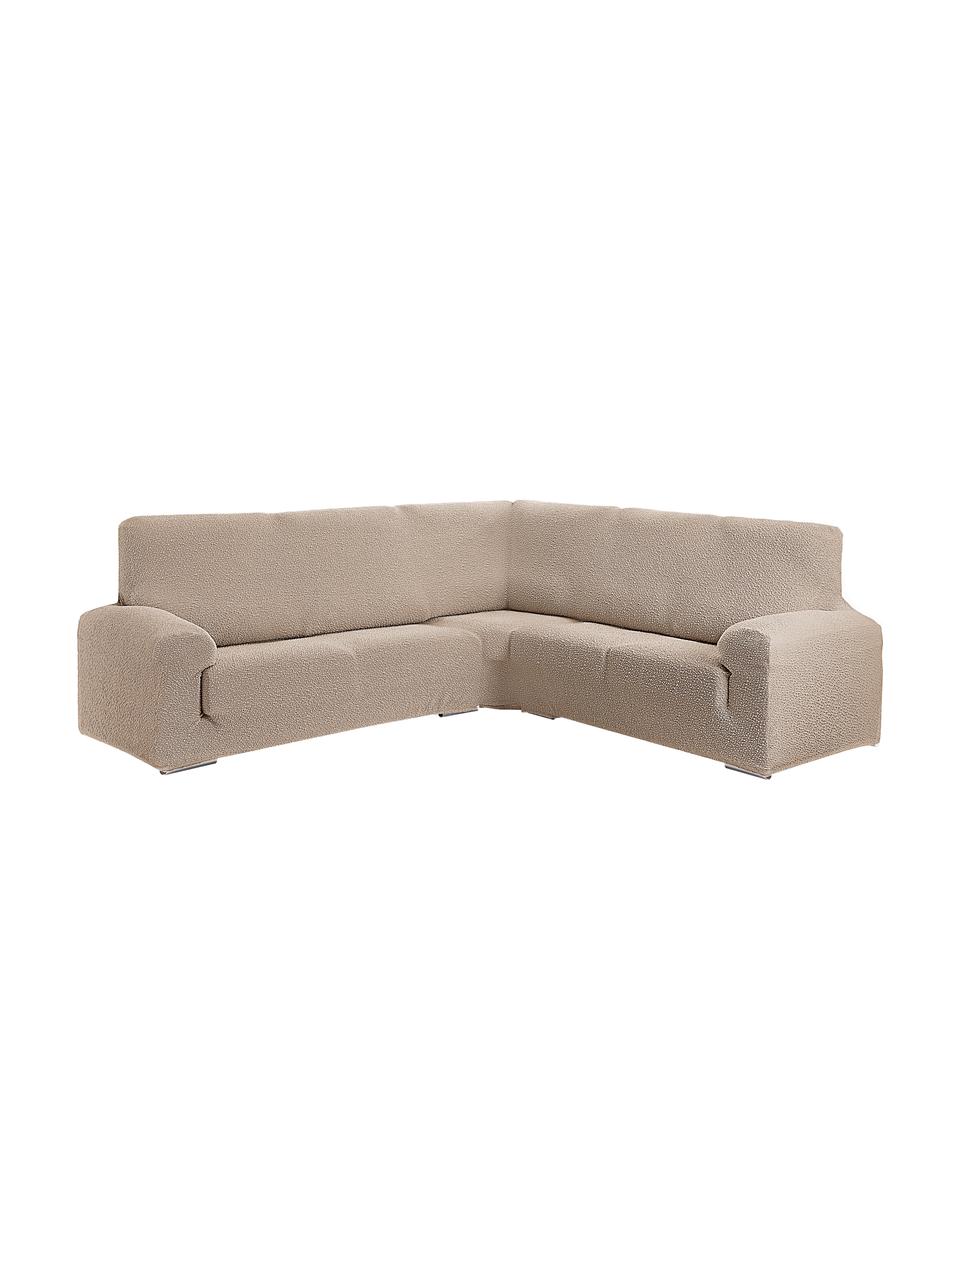 Funda de sofá rinconero Roc, 55% poliéster, 35% algodón, 10% elastómero, Beige, An 600 x Al 120 cm